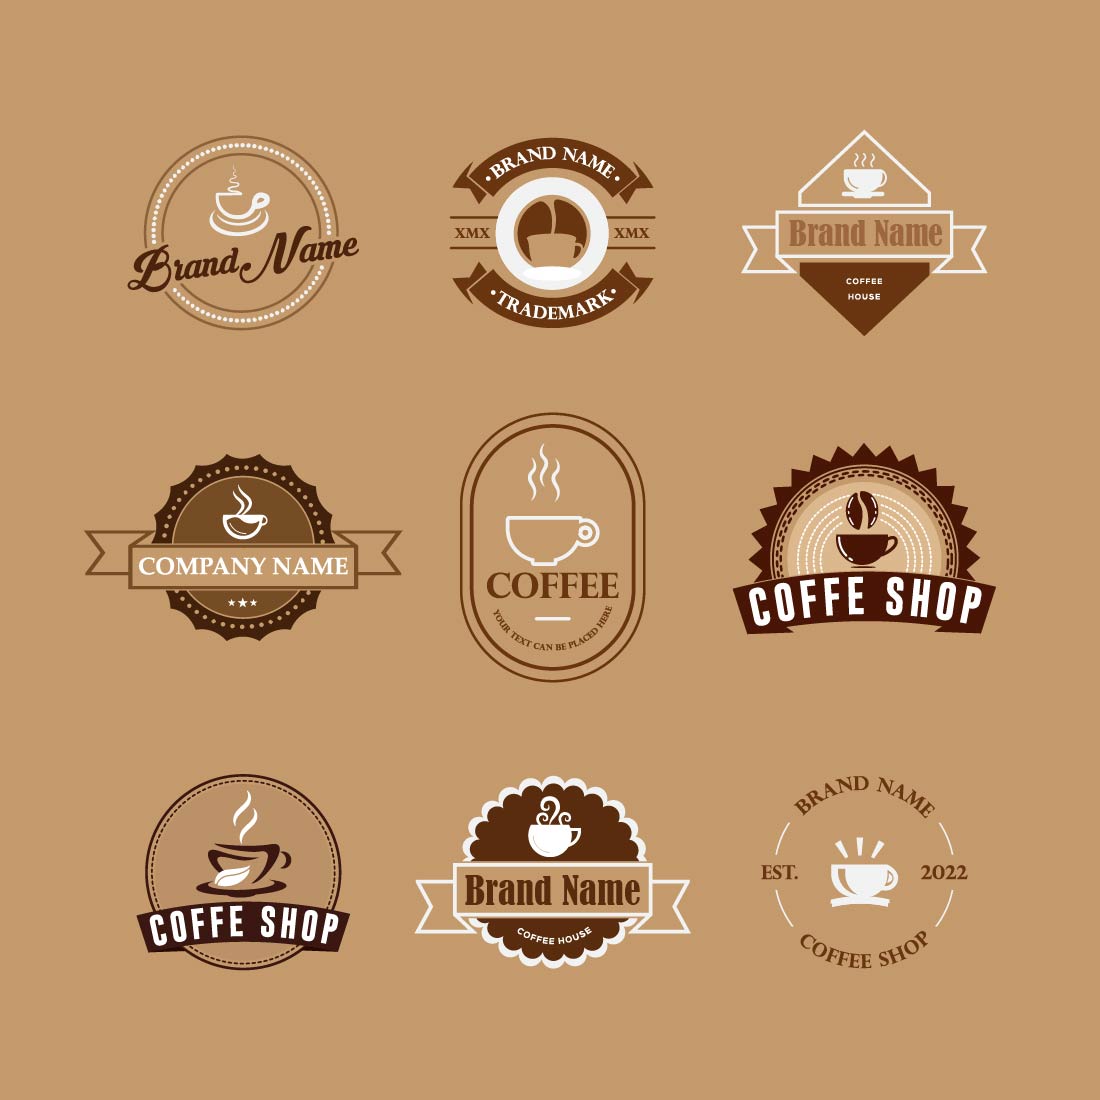 Coffee shop logo bundle preview image.